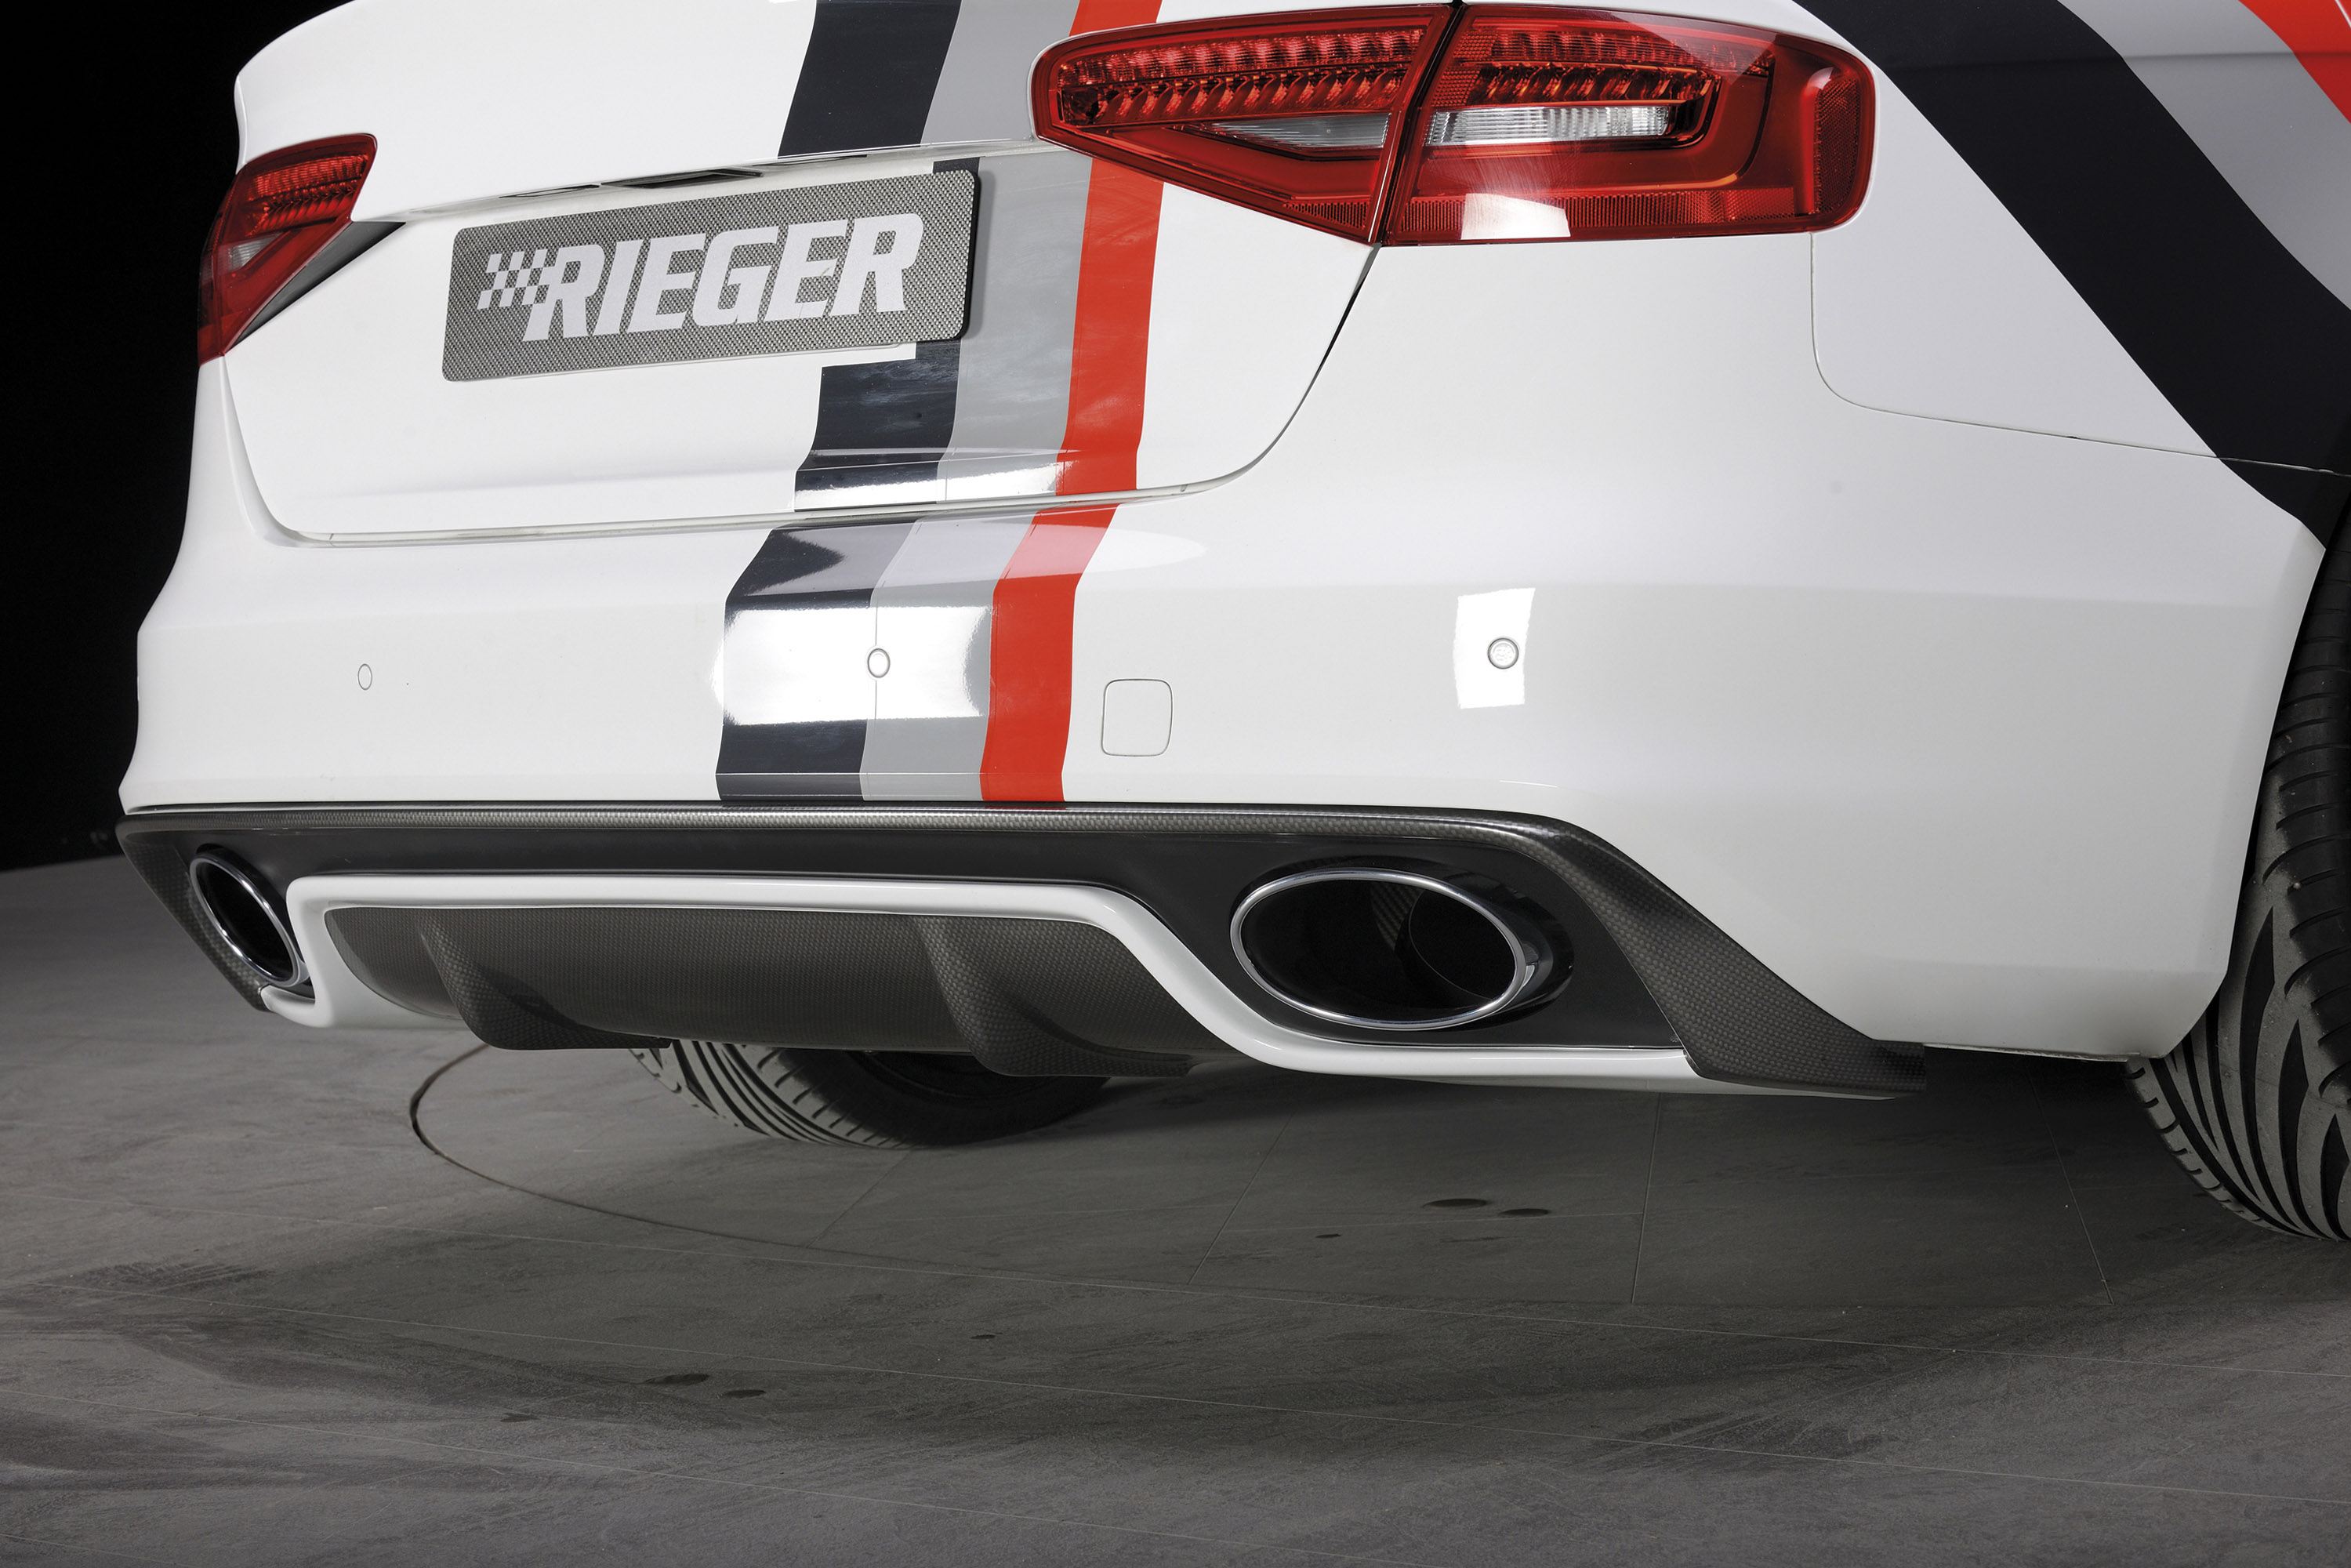 2013 Rieger Audi A4 B8 tuning e wallpaper, 2999x2000